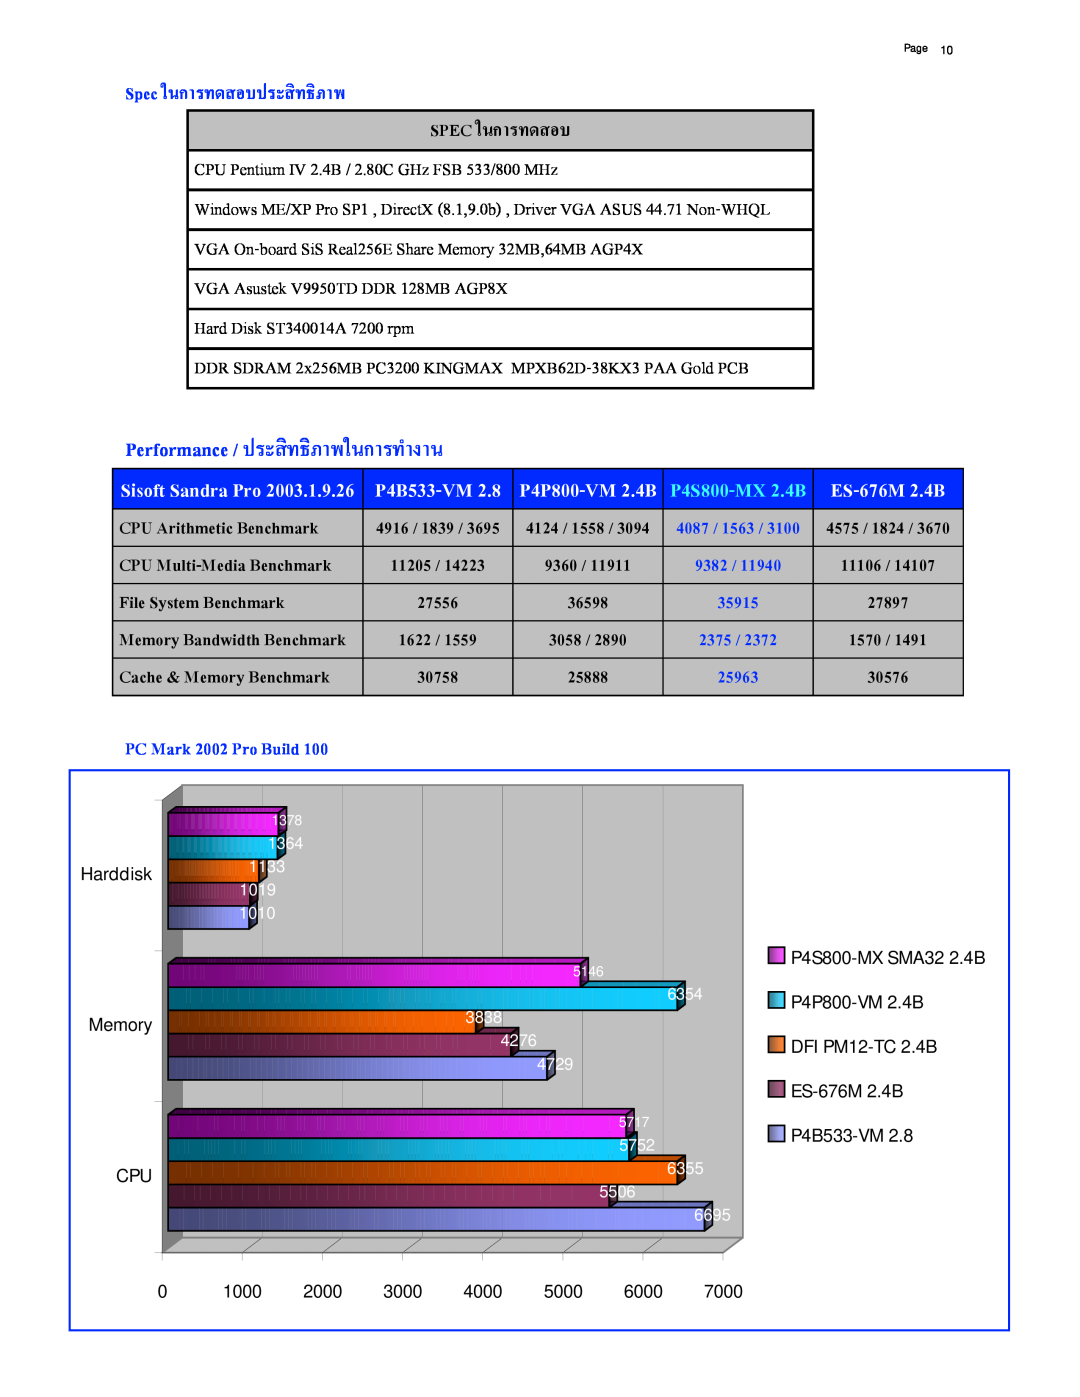 Asus P4S800-MX Spec ในการทดสอบประสิทธิภาพ, 1133, 1019, 1010, 3838, 4276, 6355, 6695, Performance / ประสิทธิภาพในการทํางาน 